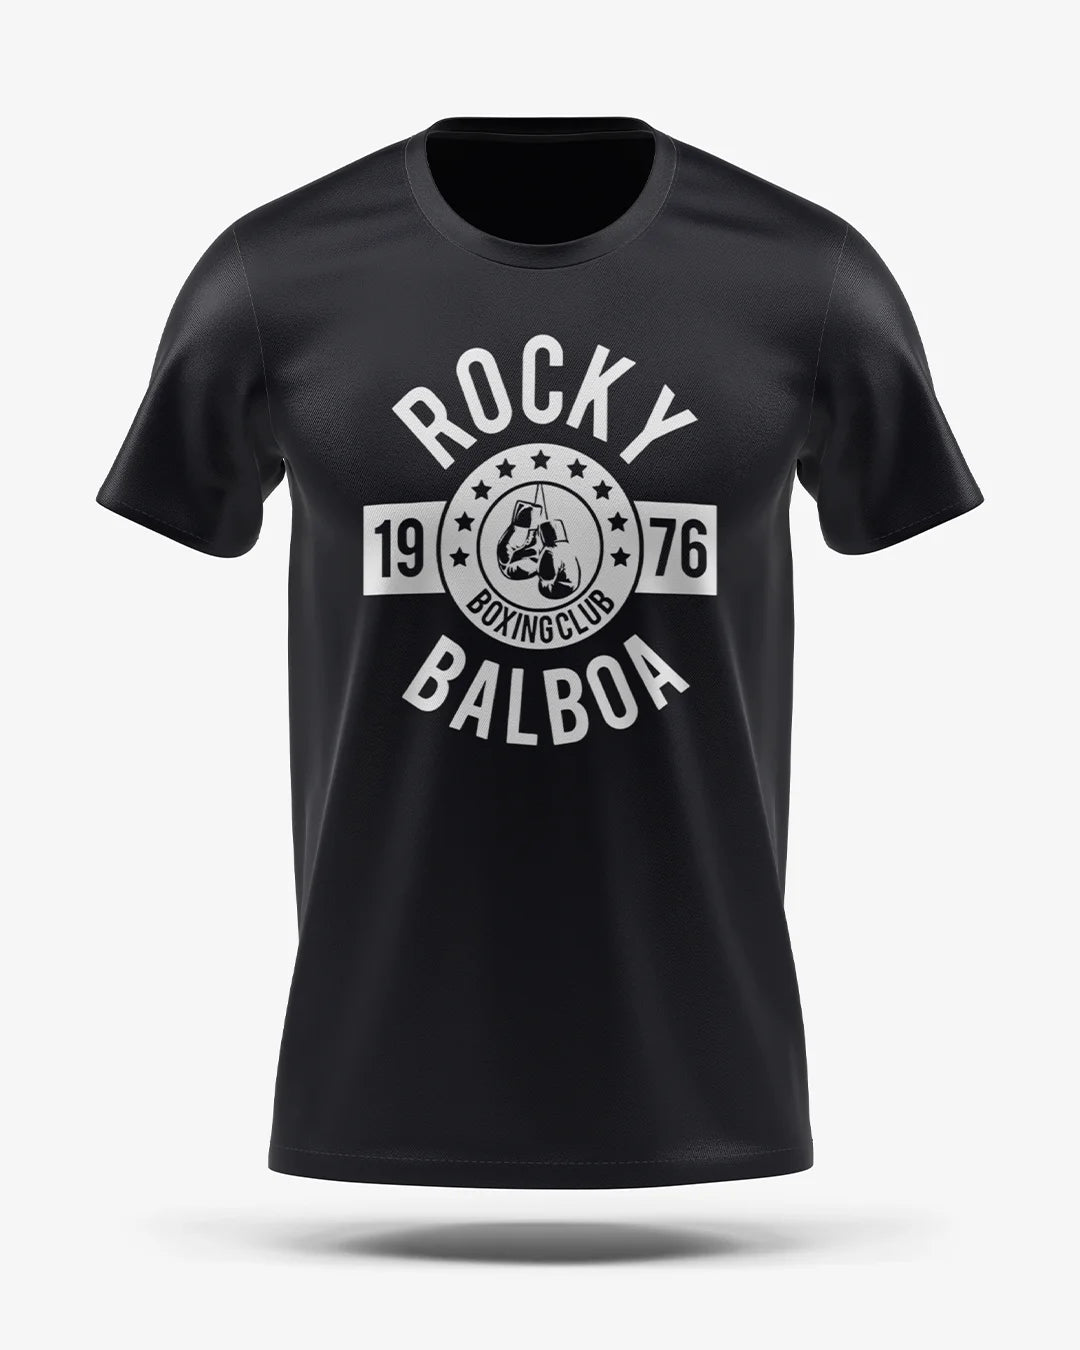 Camiseta Esporte Dry Fit - Rocky 1976 Boxing Club